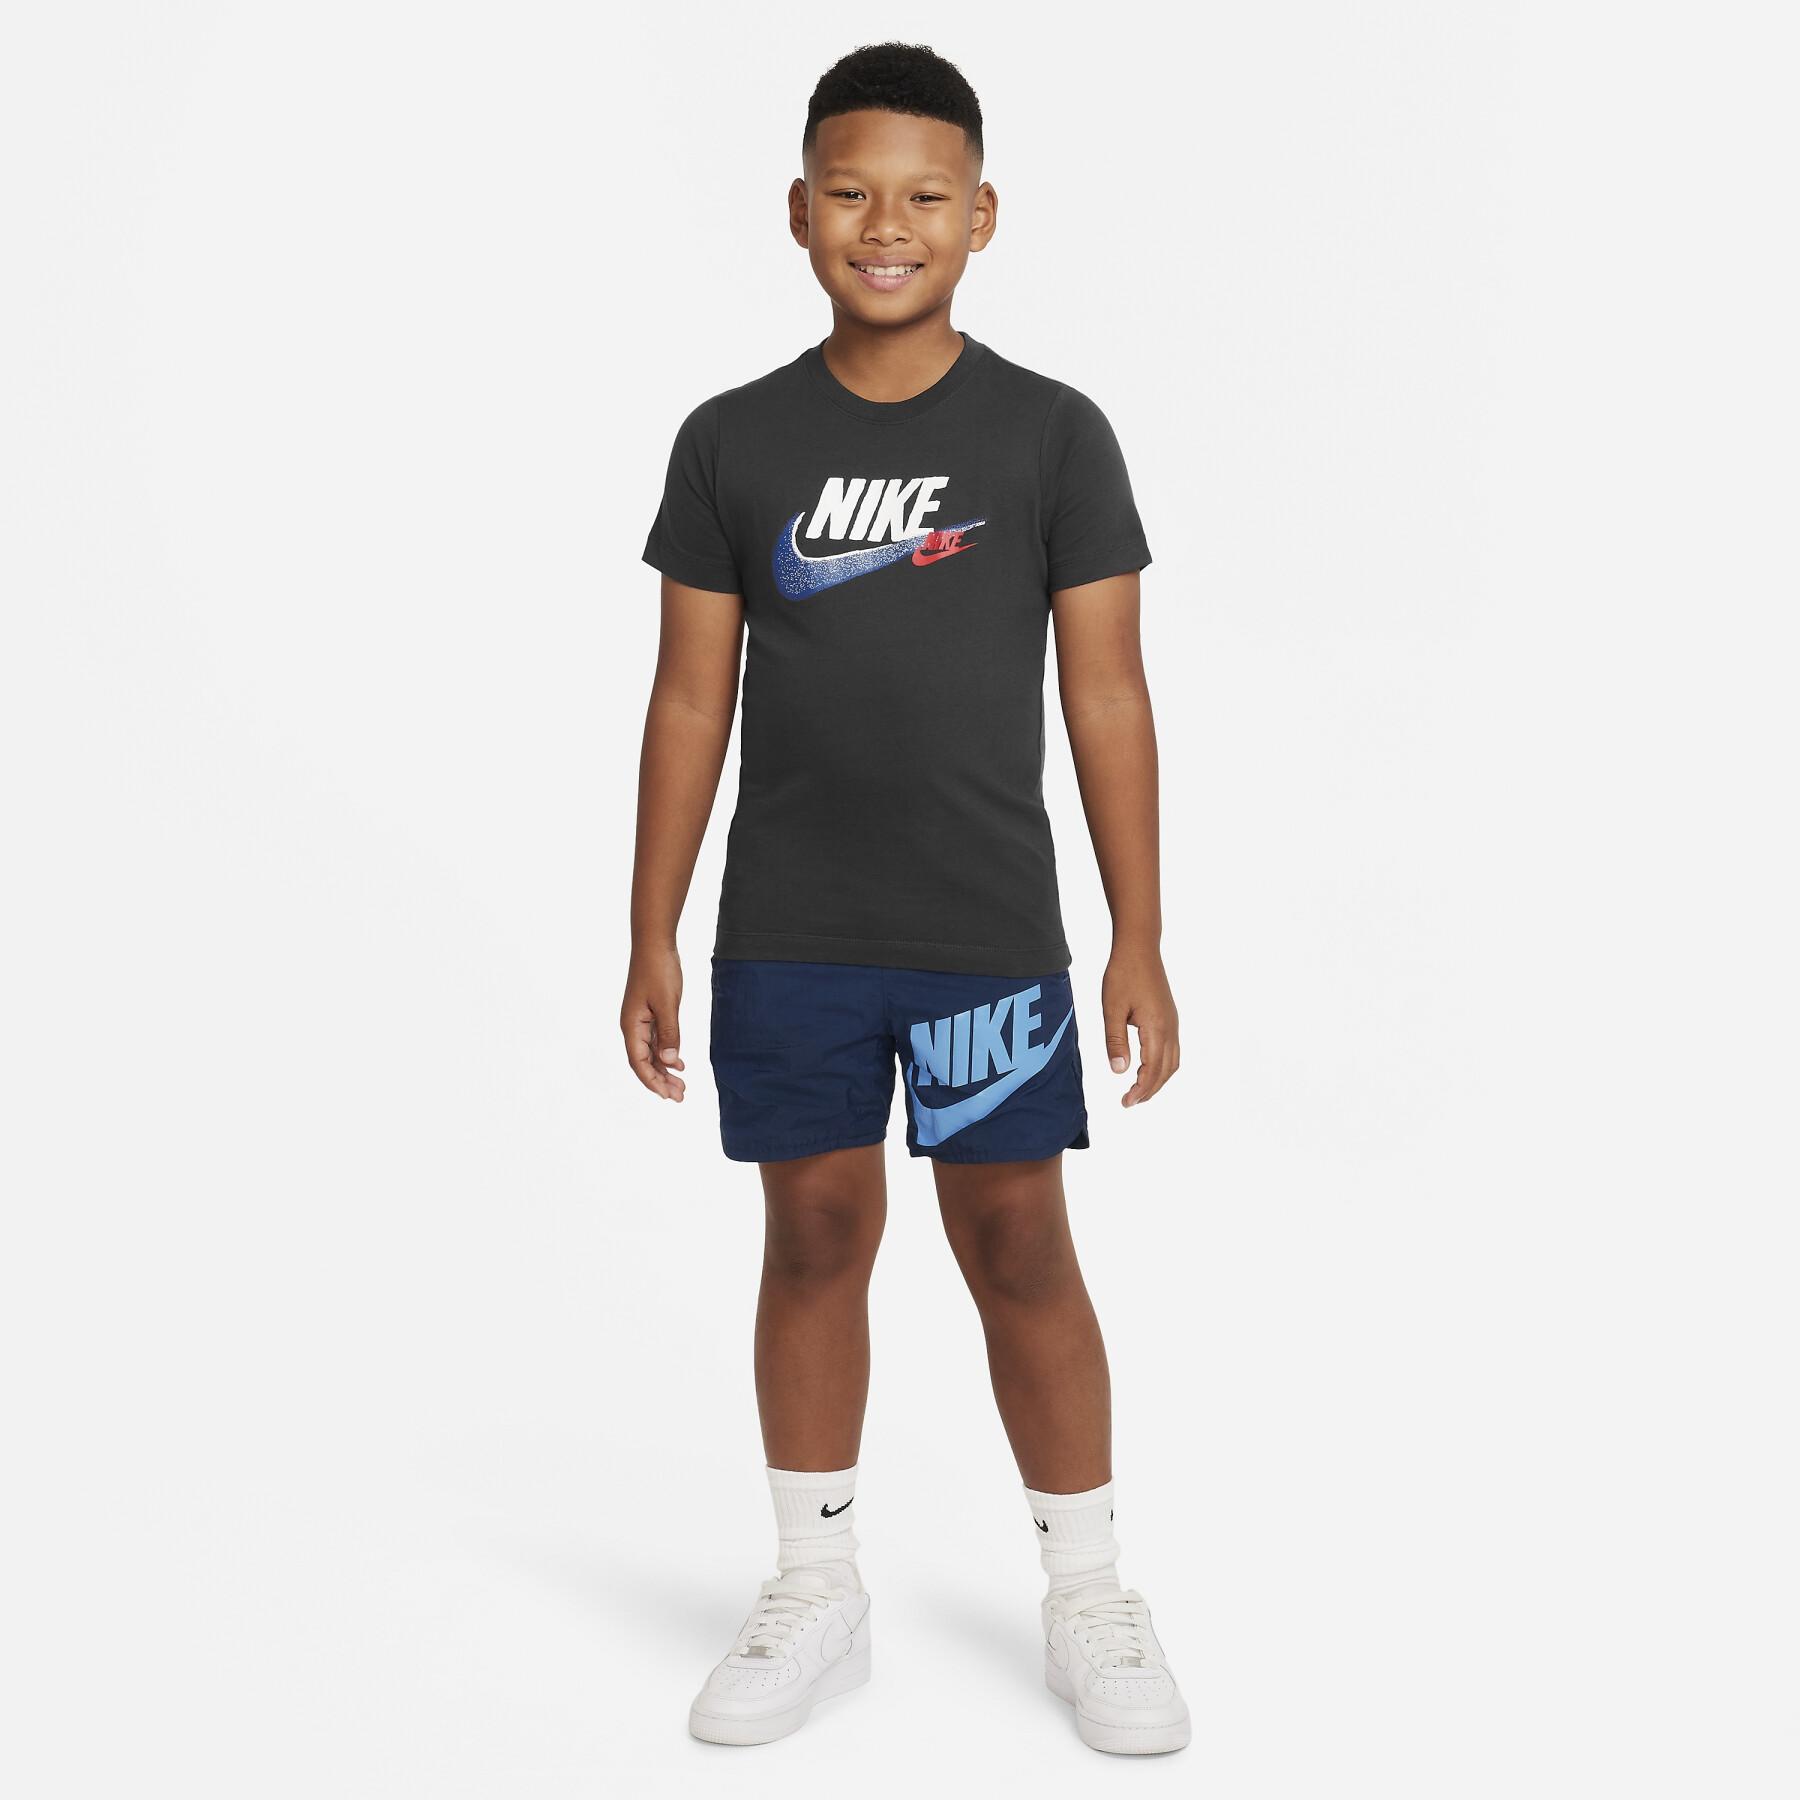 Camiseta infantil Nike Standard Issue